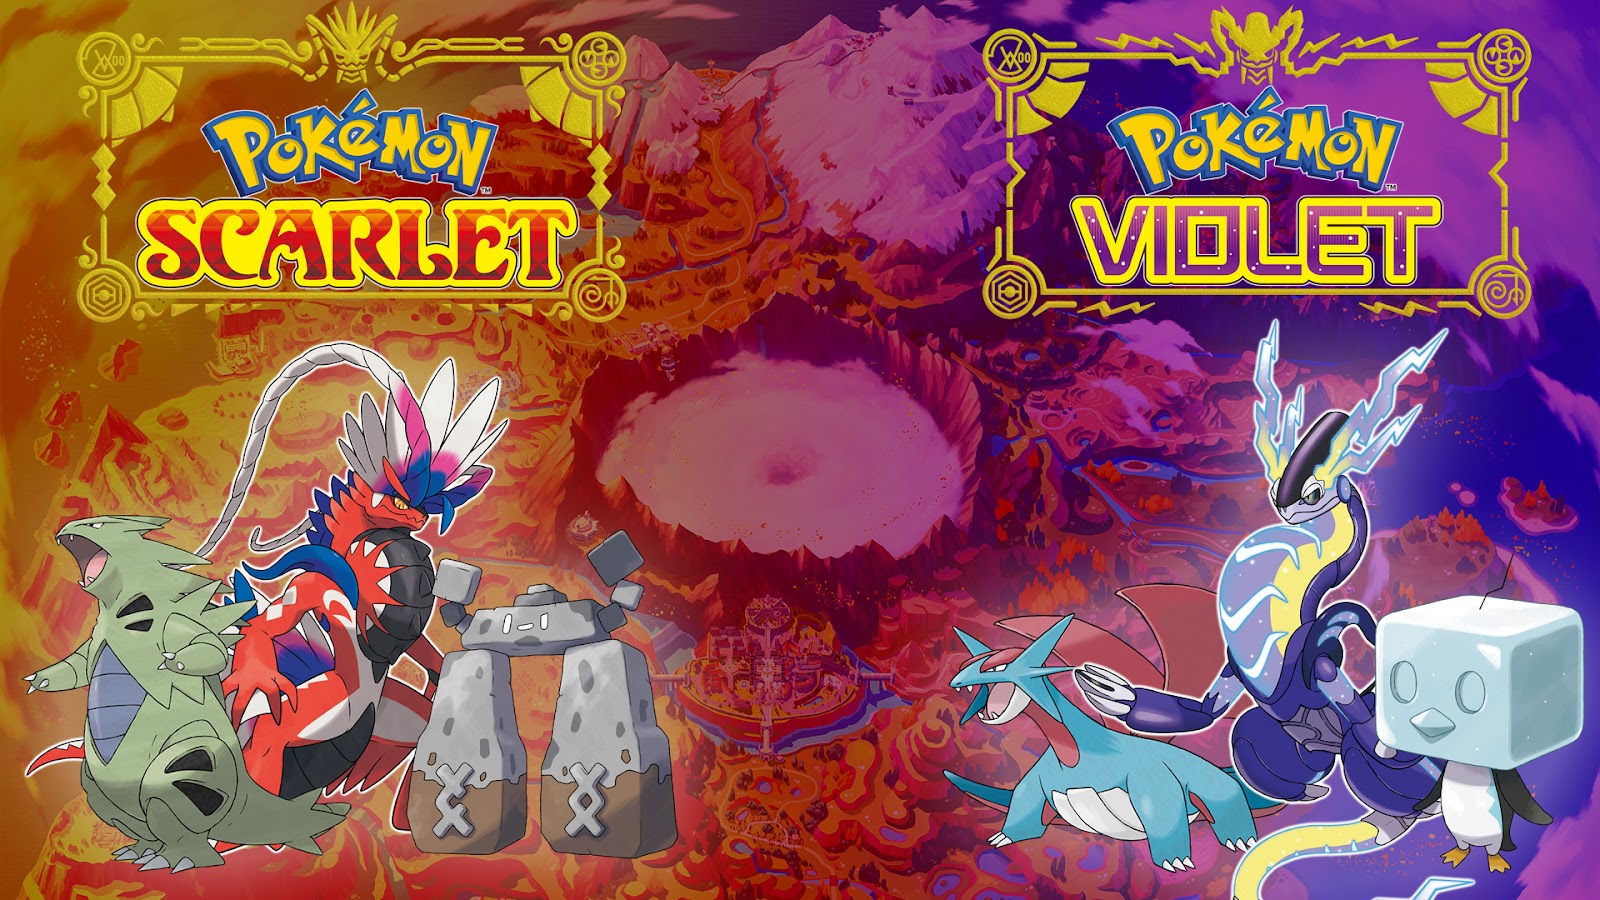 Pokémon Blast News on X: Pokémon dragão exclusivos de cada jogo